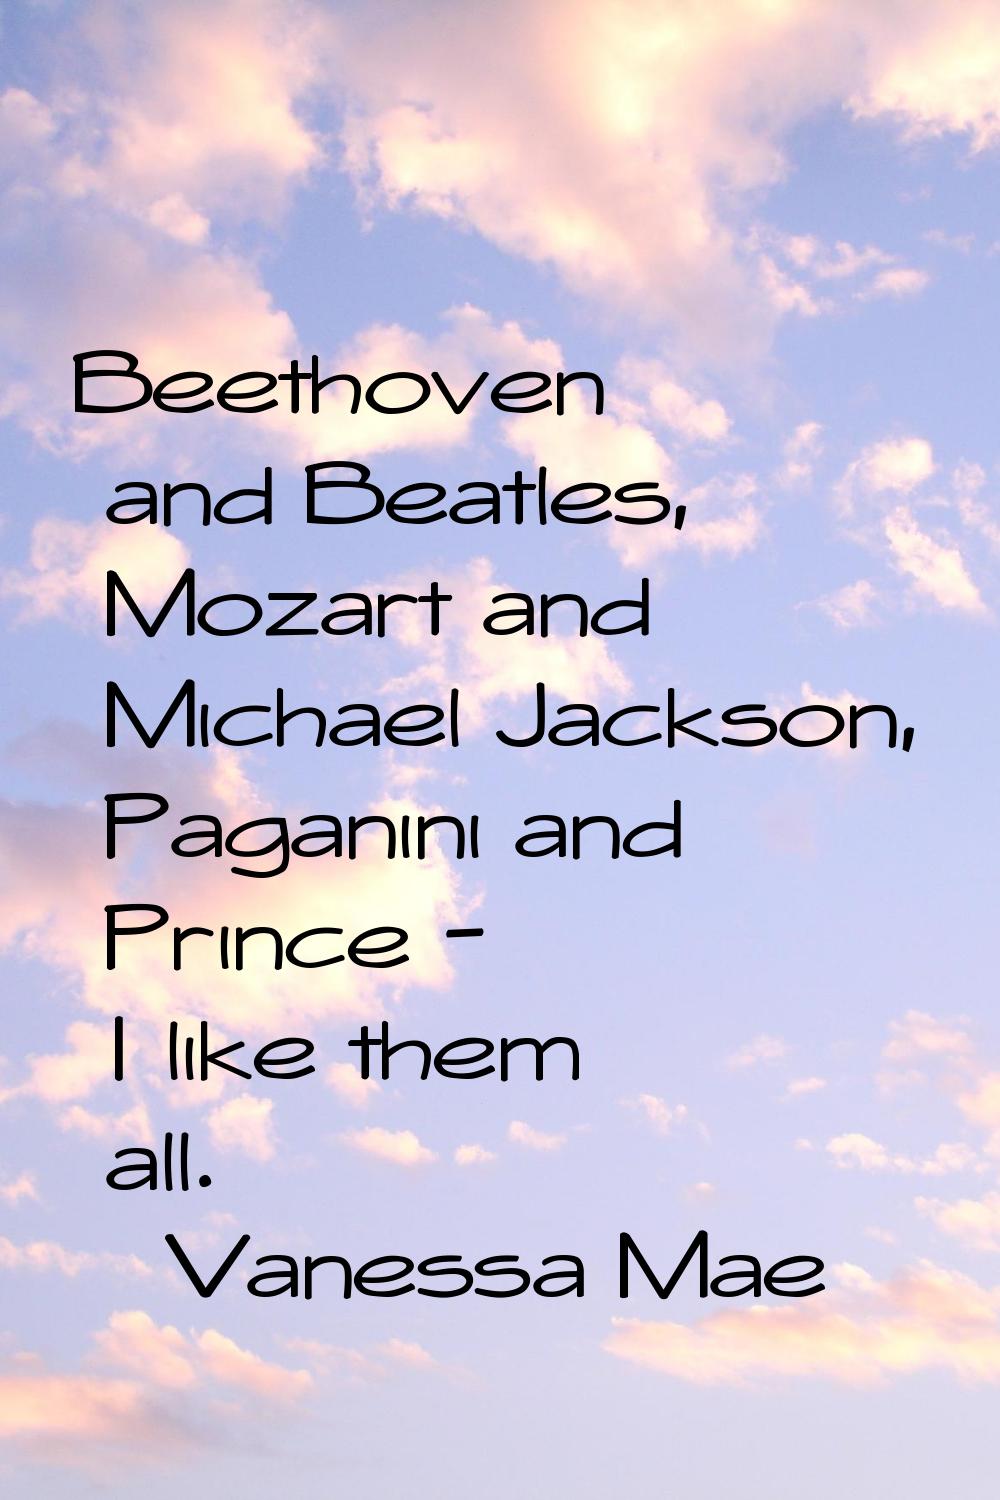 Beethoven and Beatles, Mozart and Michael Jackson, Paganini and Prince - I like them all.